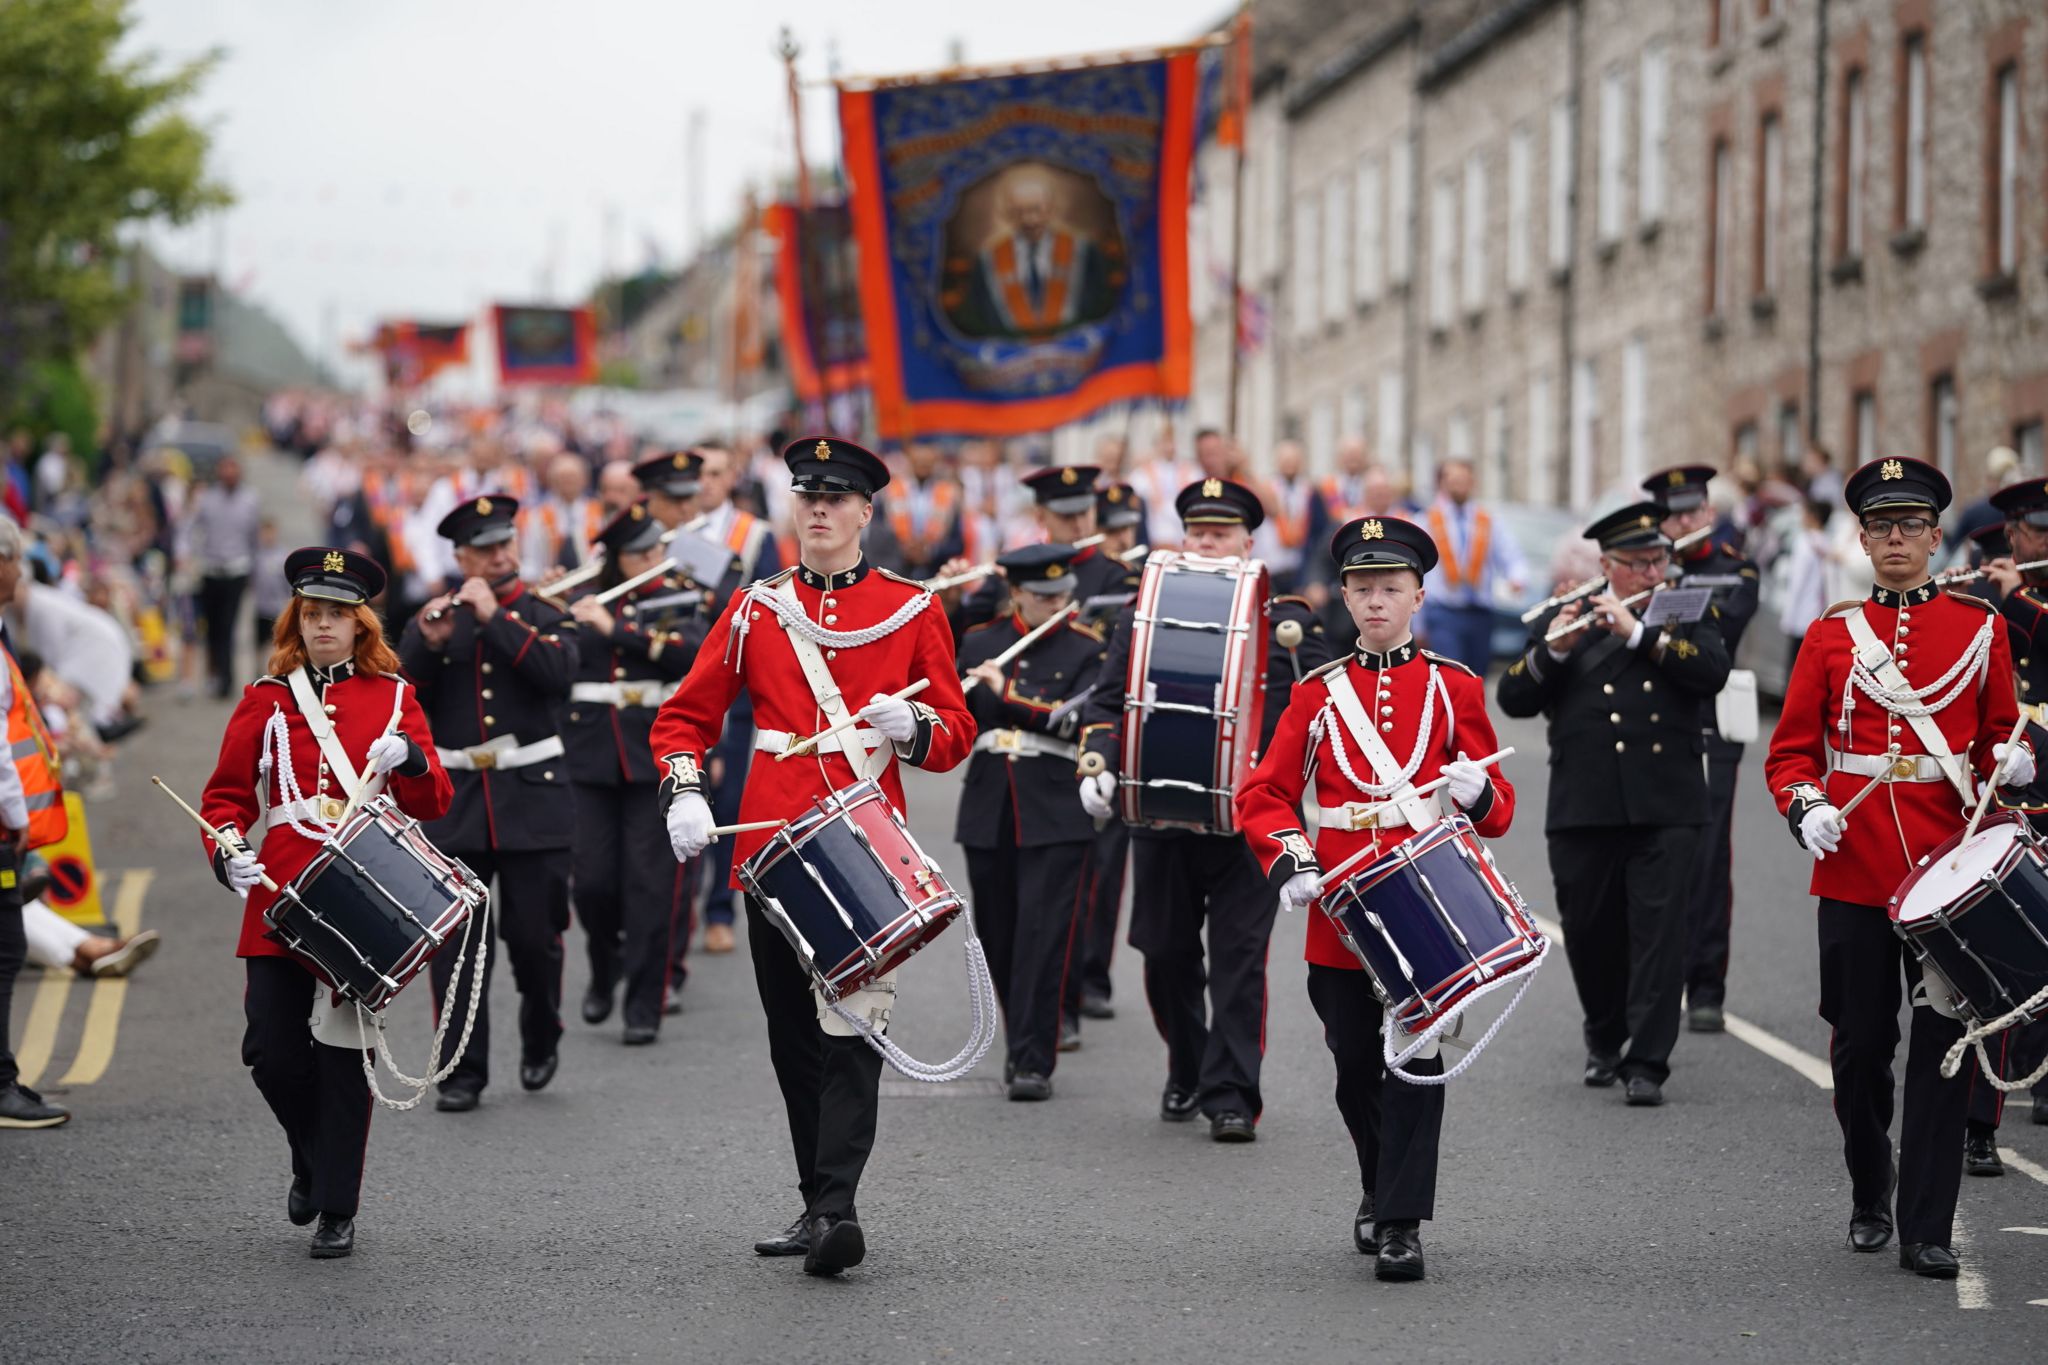 Twelfth parade in Armagh 2022